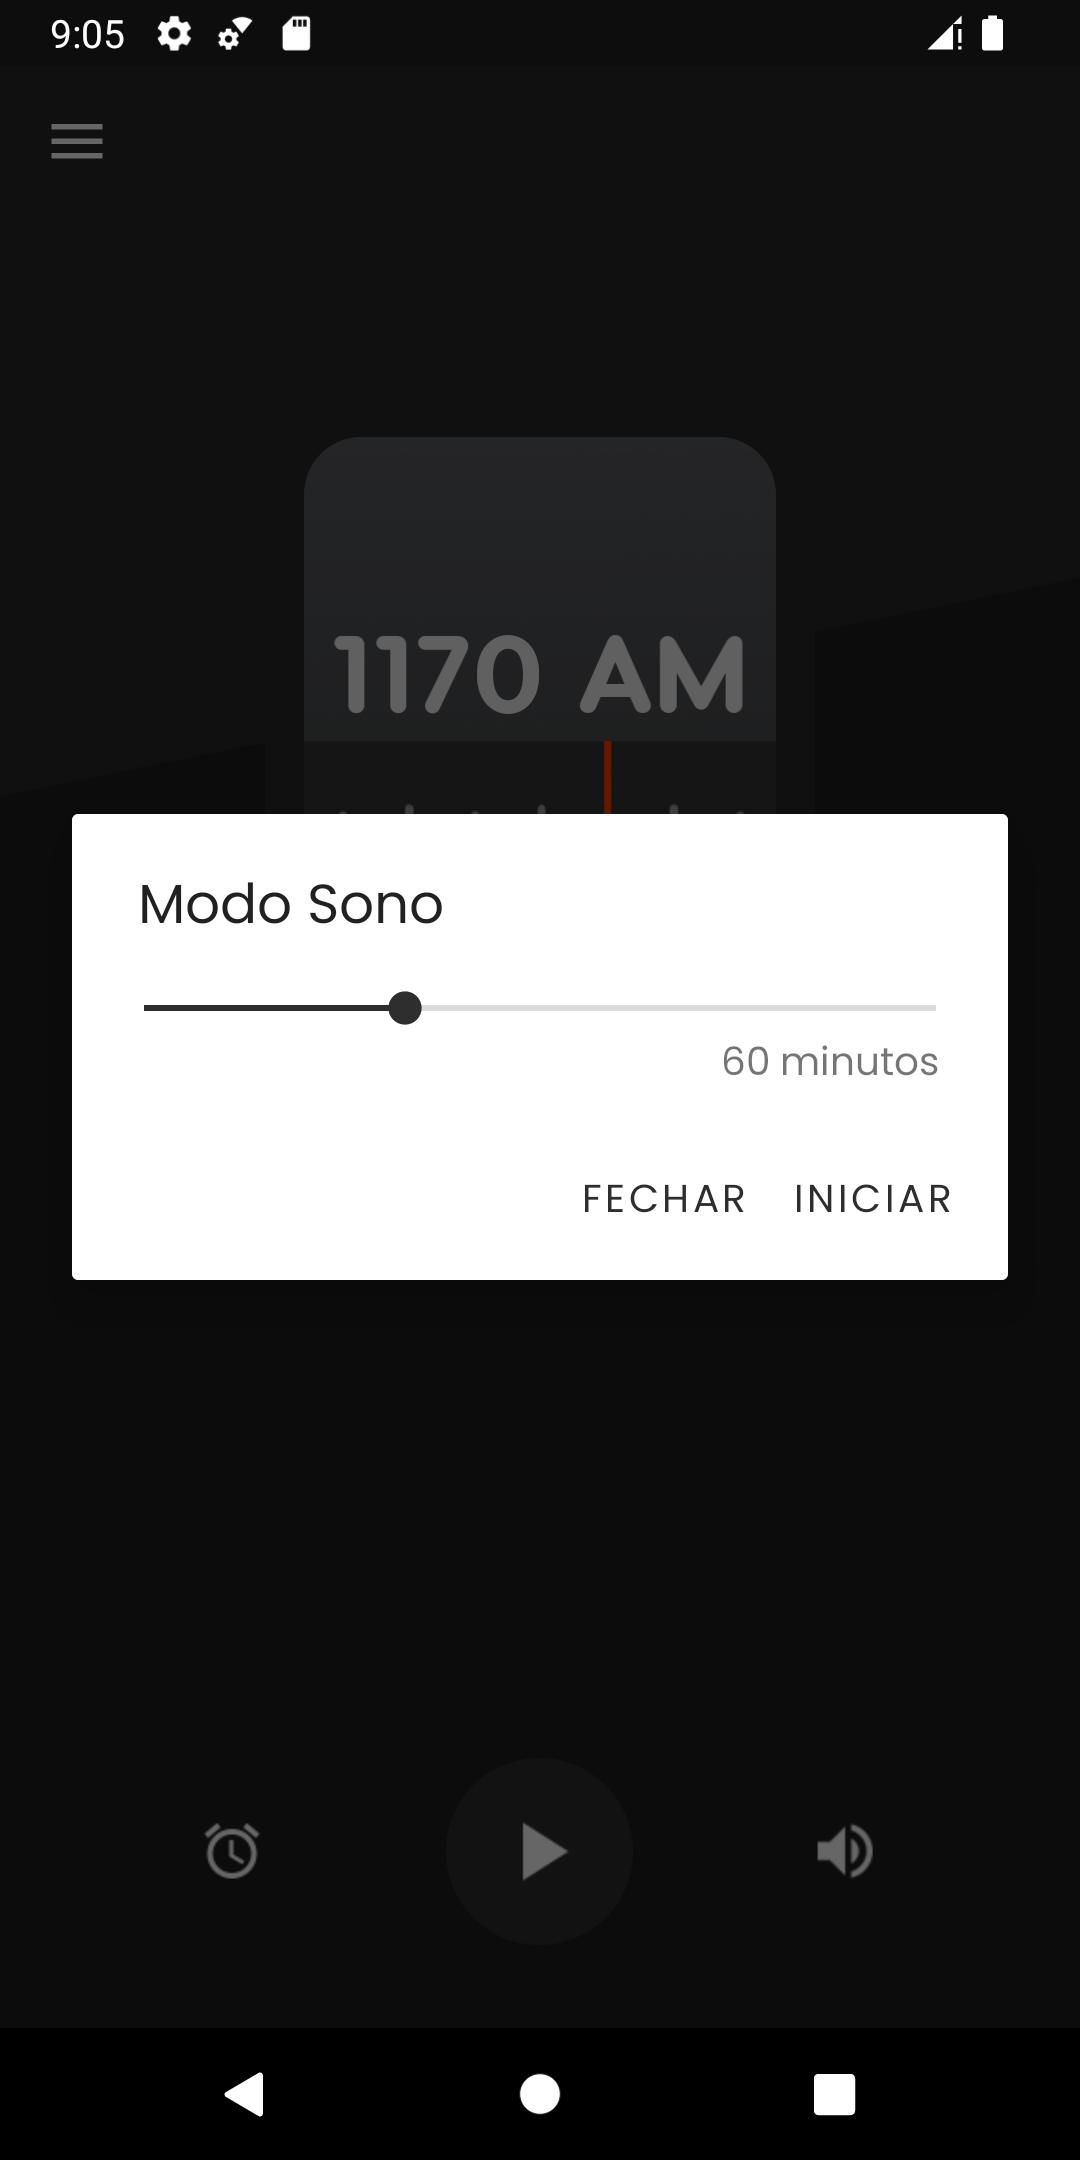 Rádio Caiobá FM